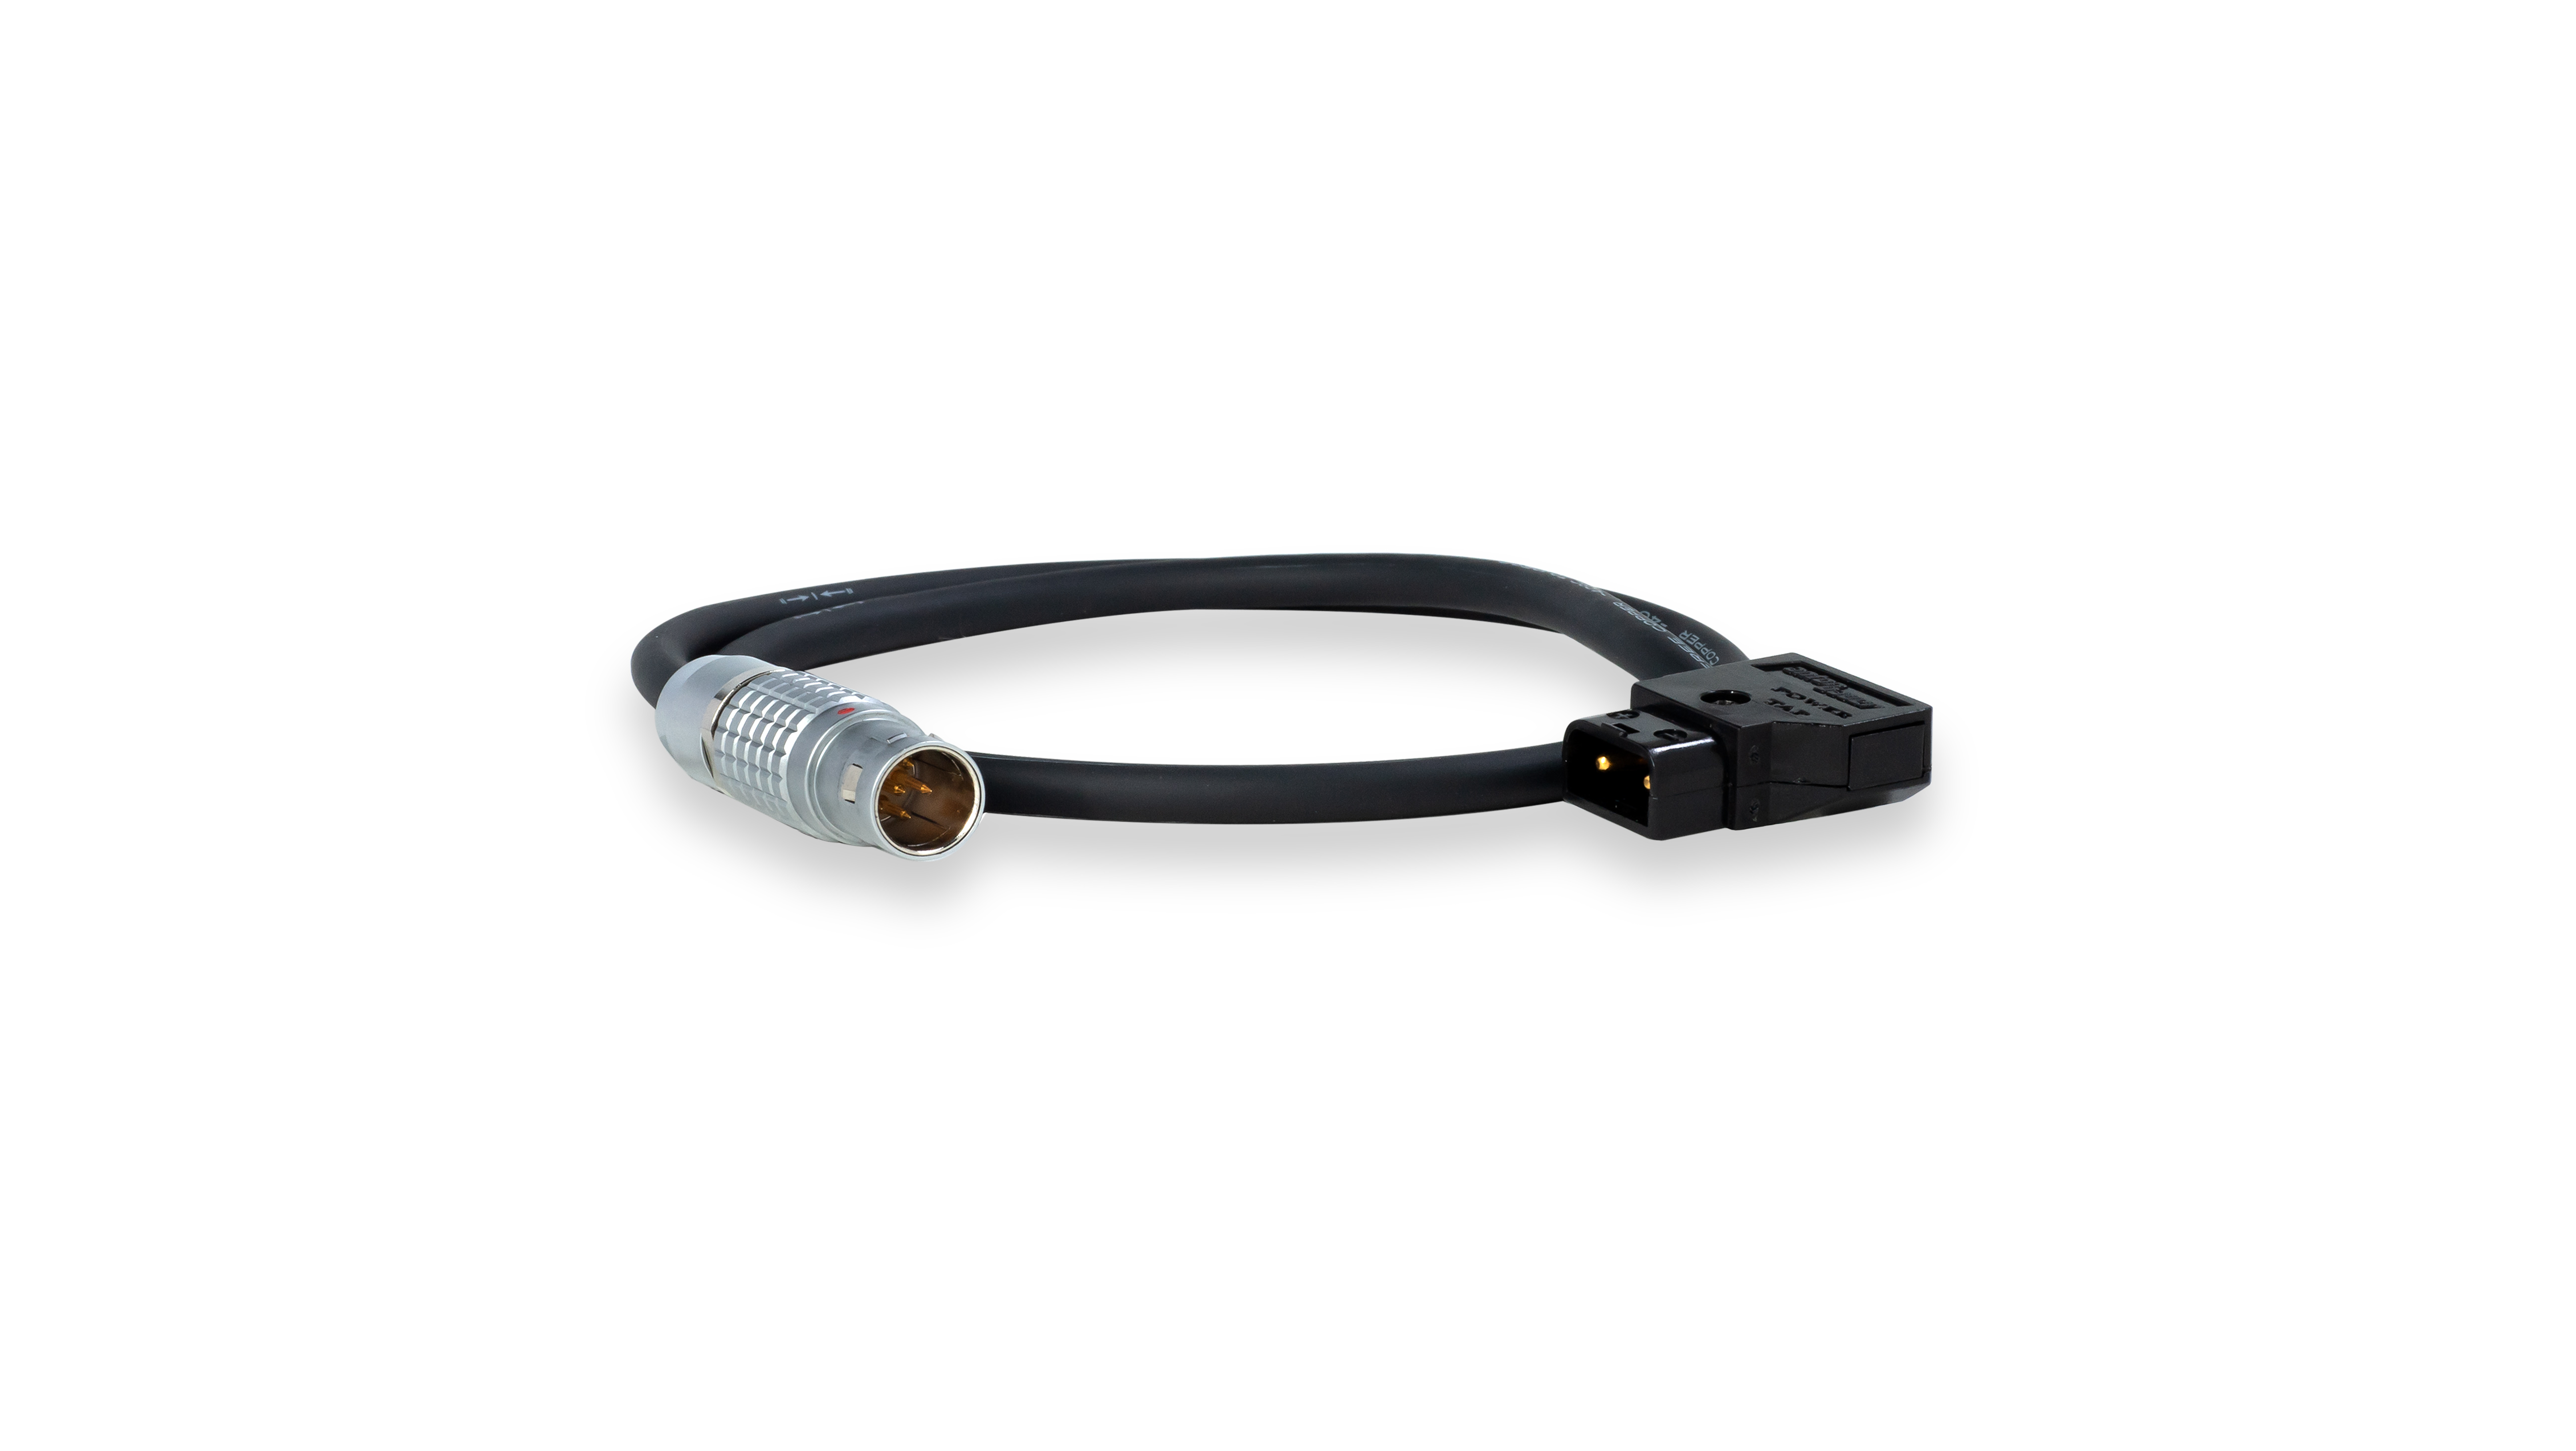 P-TAP to ARRI Alexa Mini Power Cable